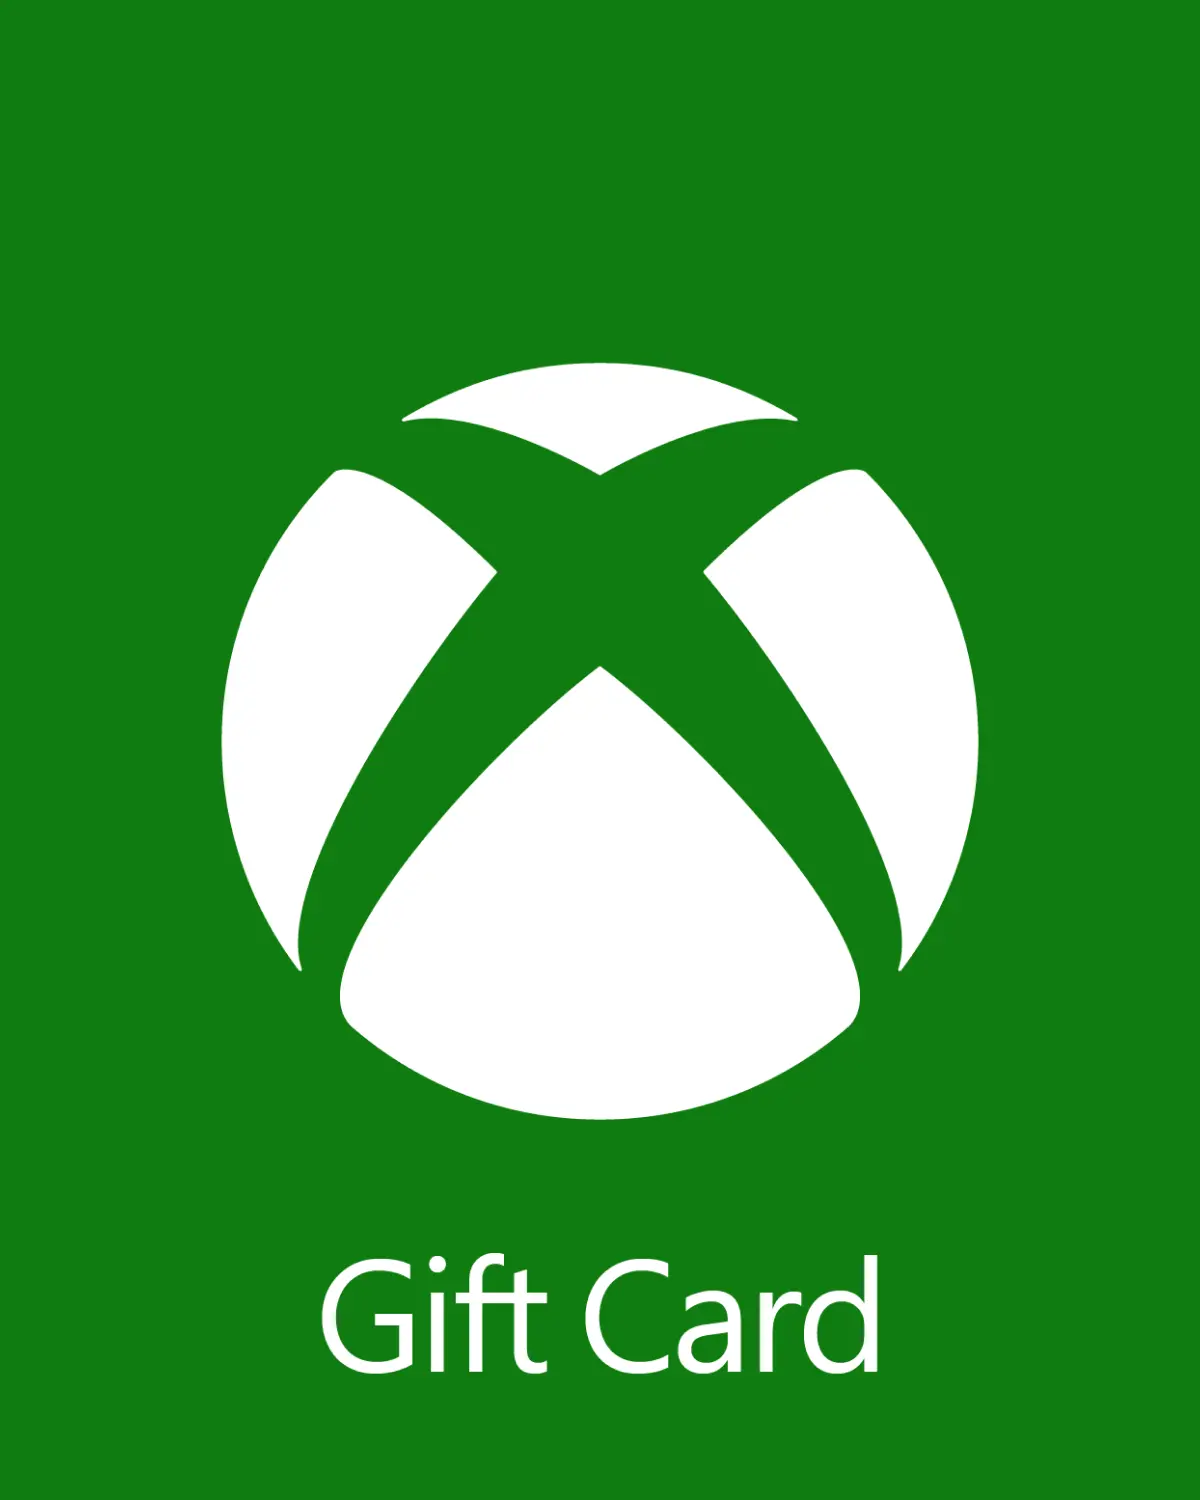 Xbox $15 NZD Gift Card (NZ) - Digital Code